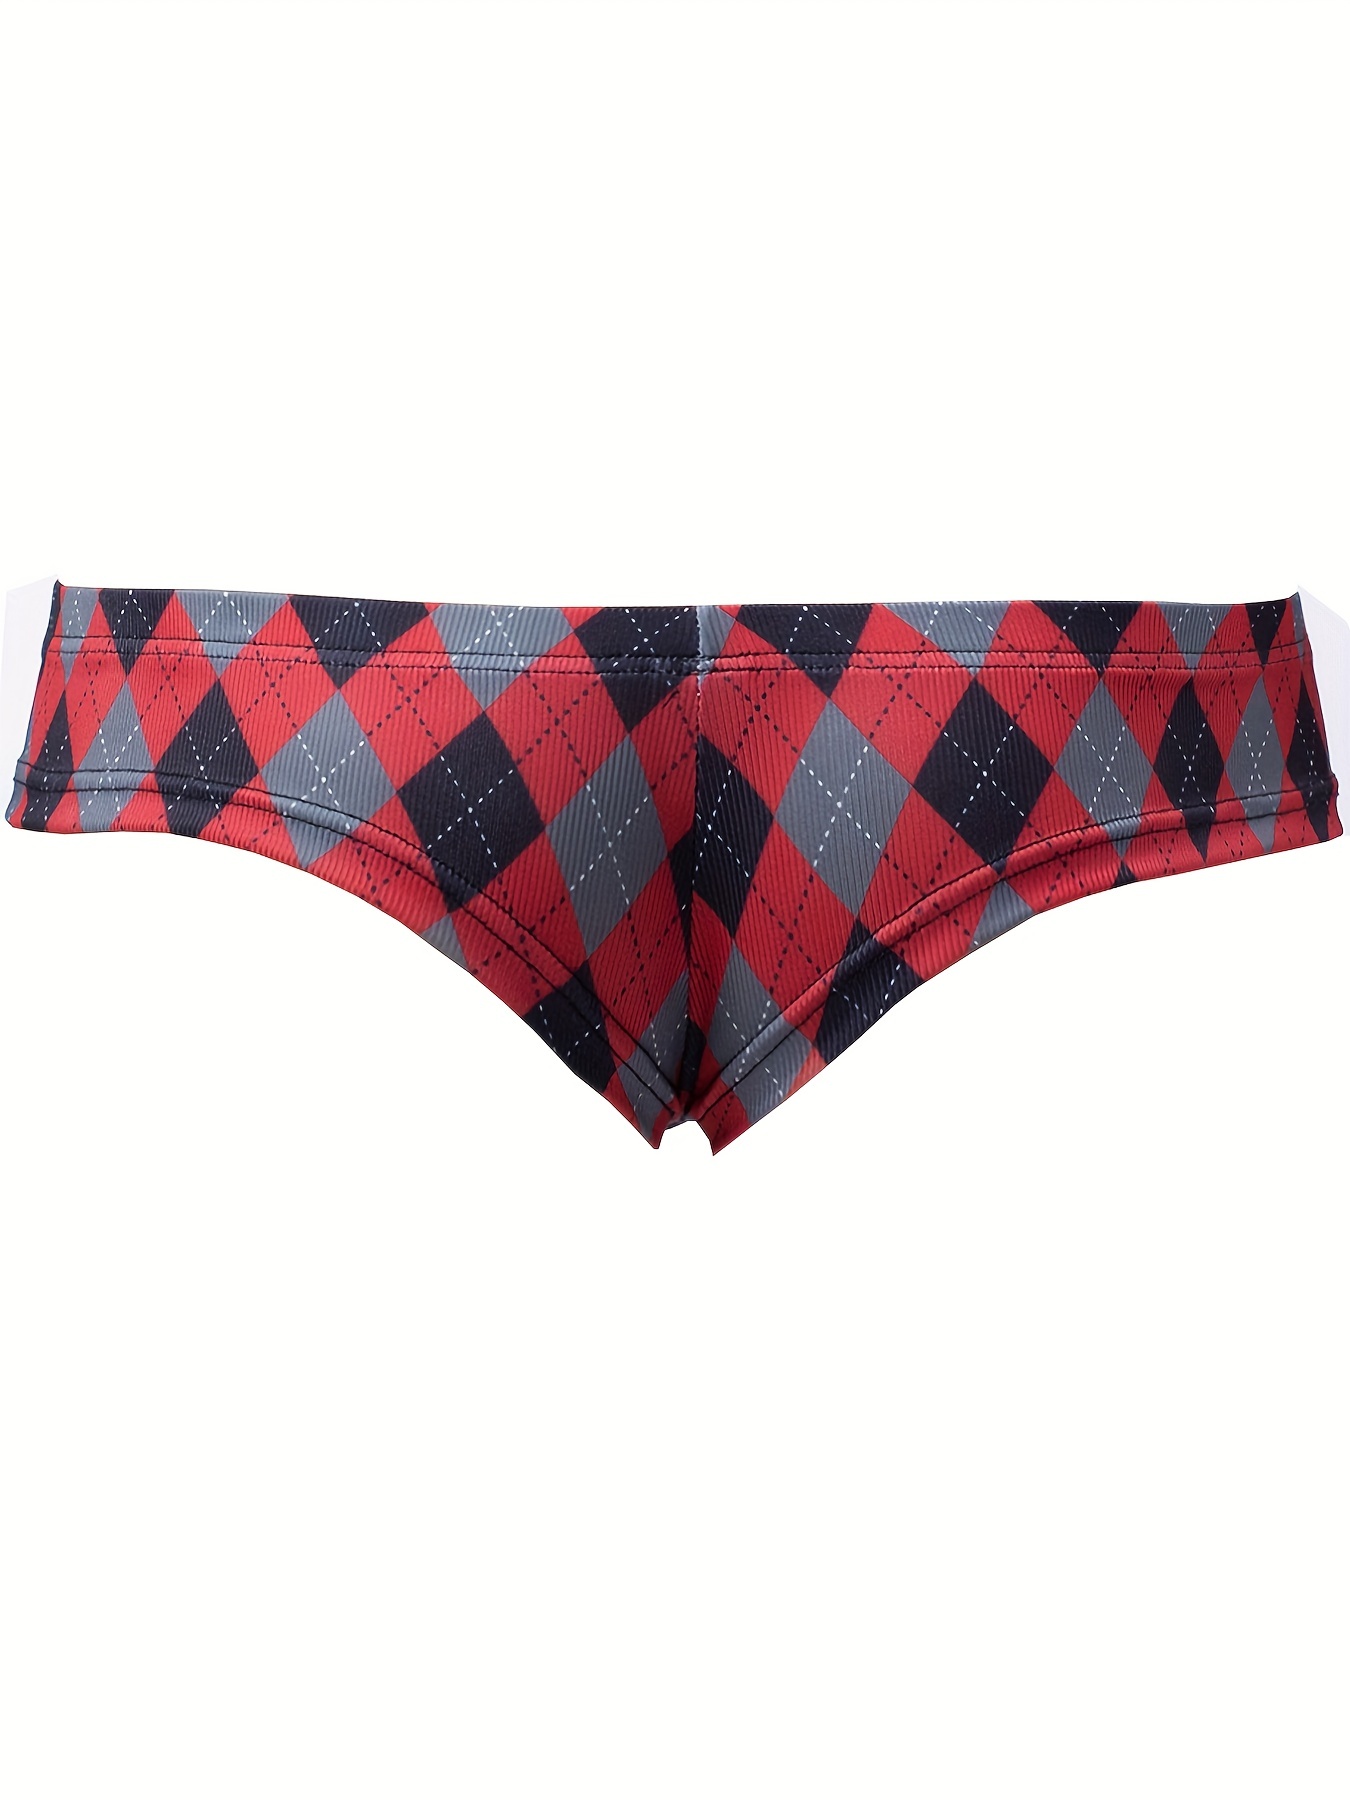 Mens Convex Leopard Print Briefs Lingerie Low Rise Underwear NightwearHot  Pants